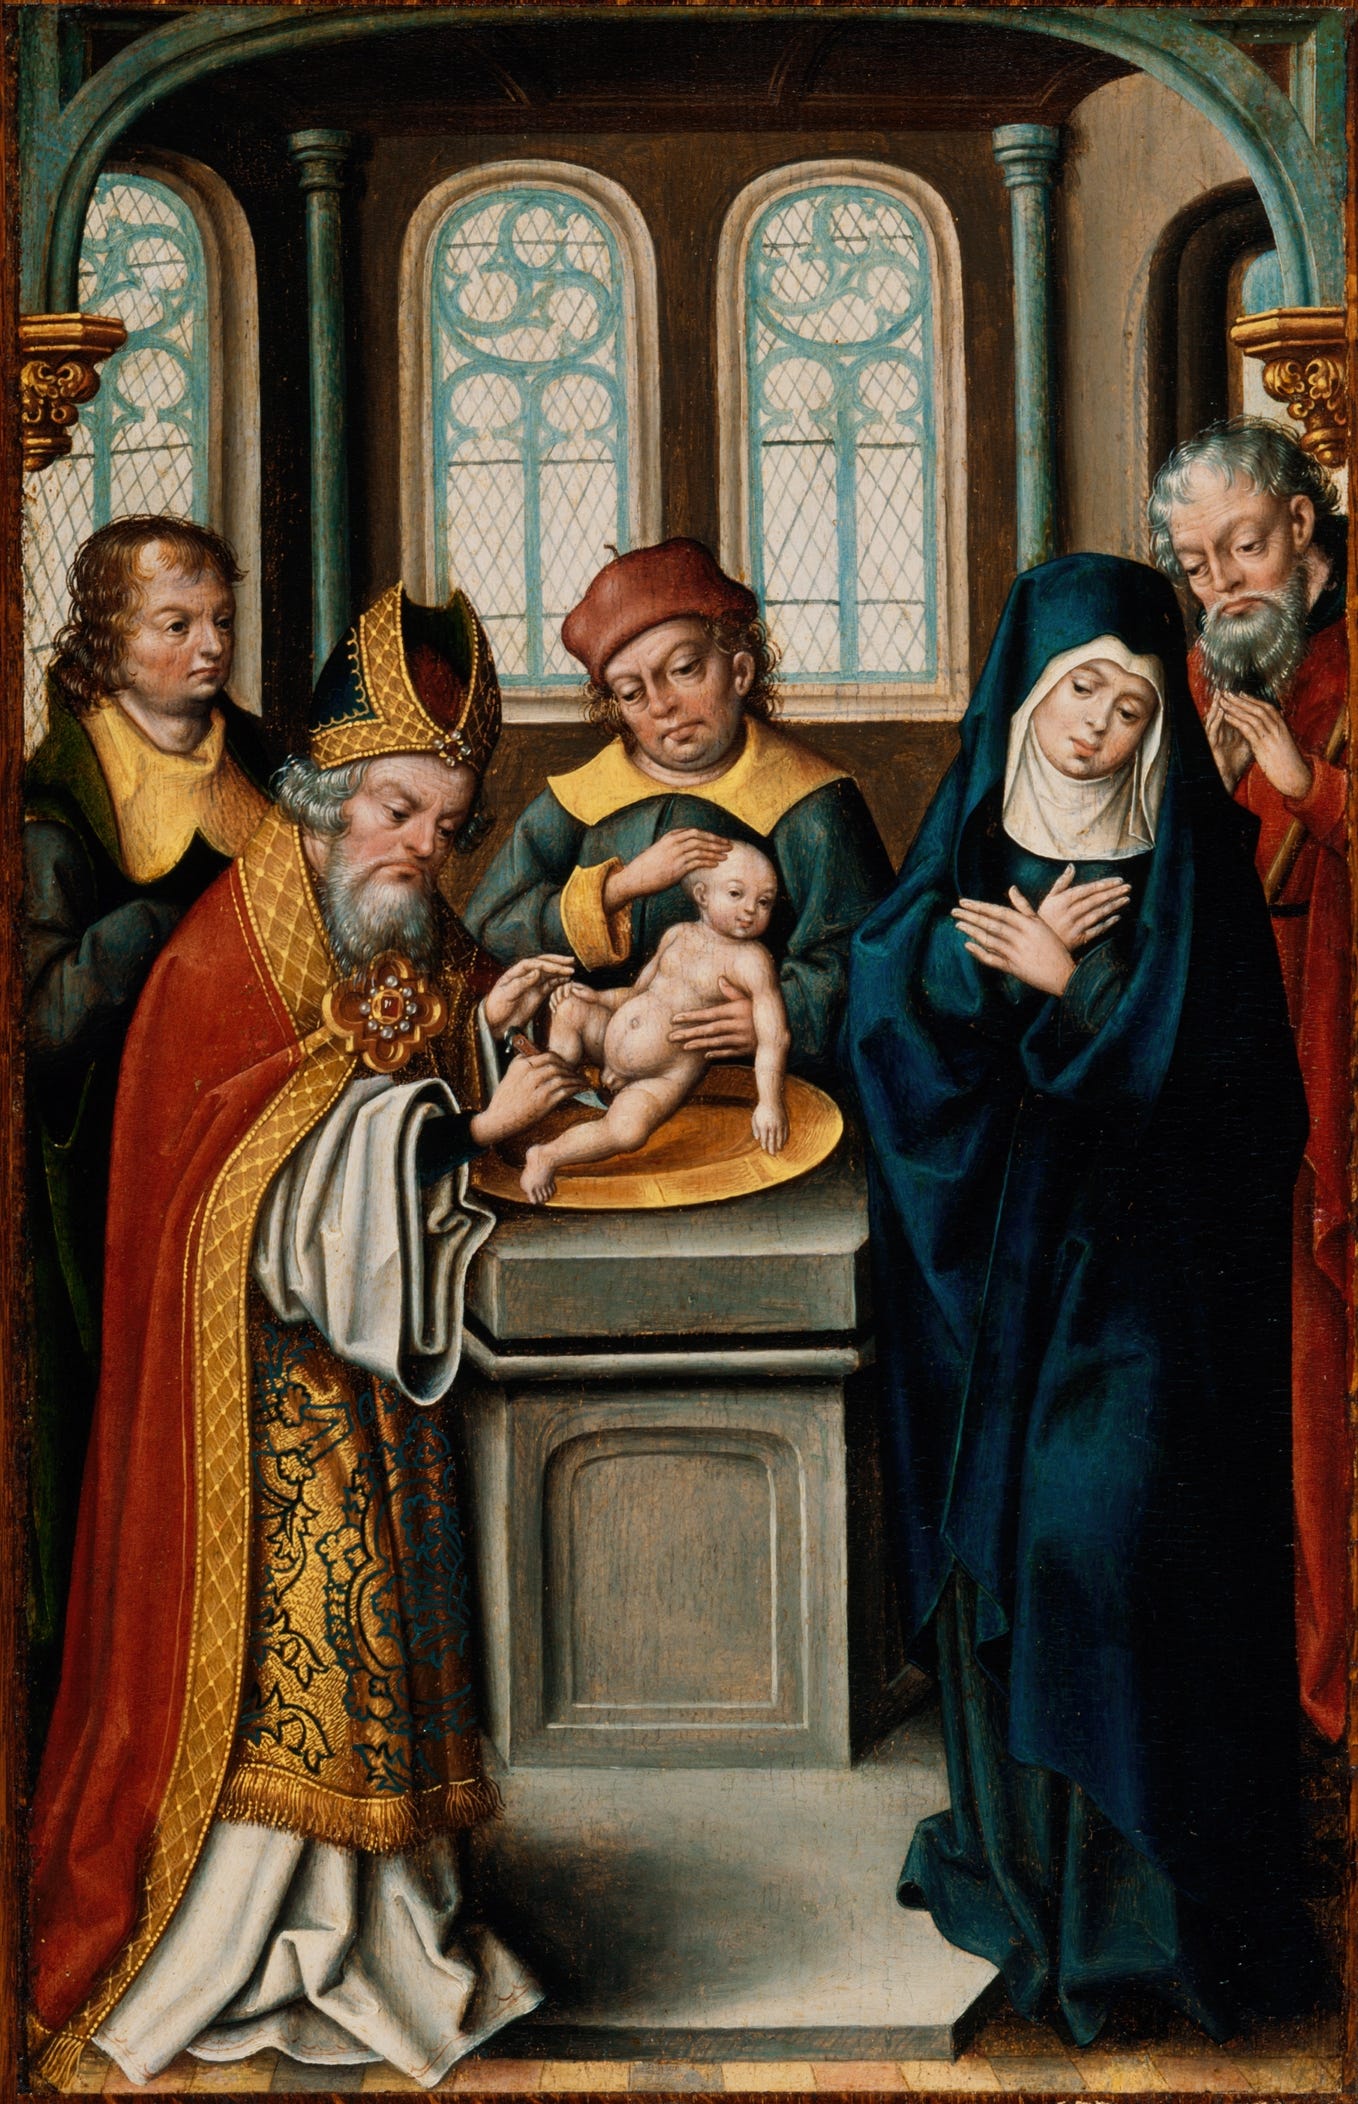 The Circumcision of Christ (circa 1495) by Jan Baegert (German, 1465-1535)